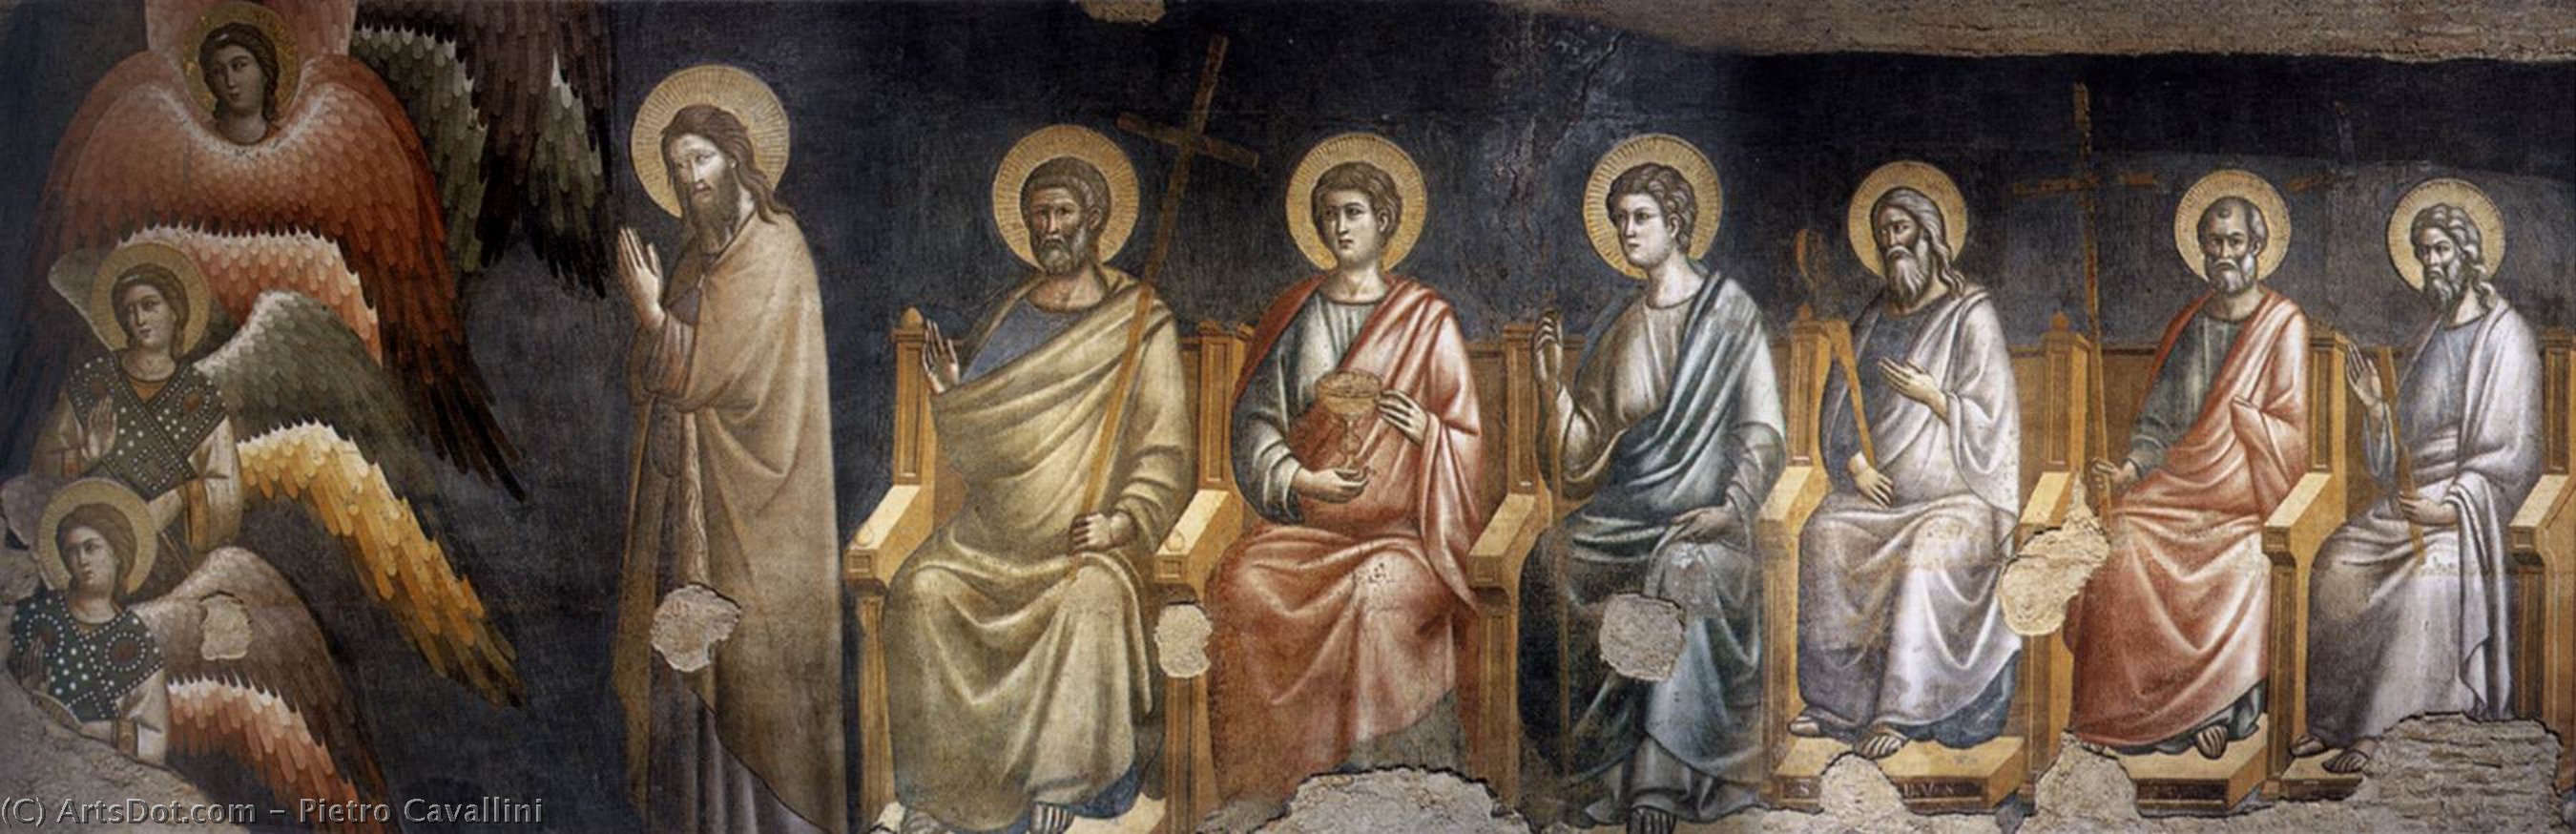 Order Oil Painting Replica The Last Judgement (detail) (26), 1290 by Pietro Cavallini (1240-1330, Italy) | ArtsDot.com